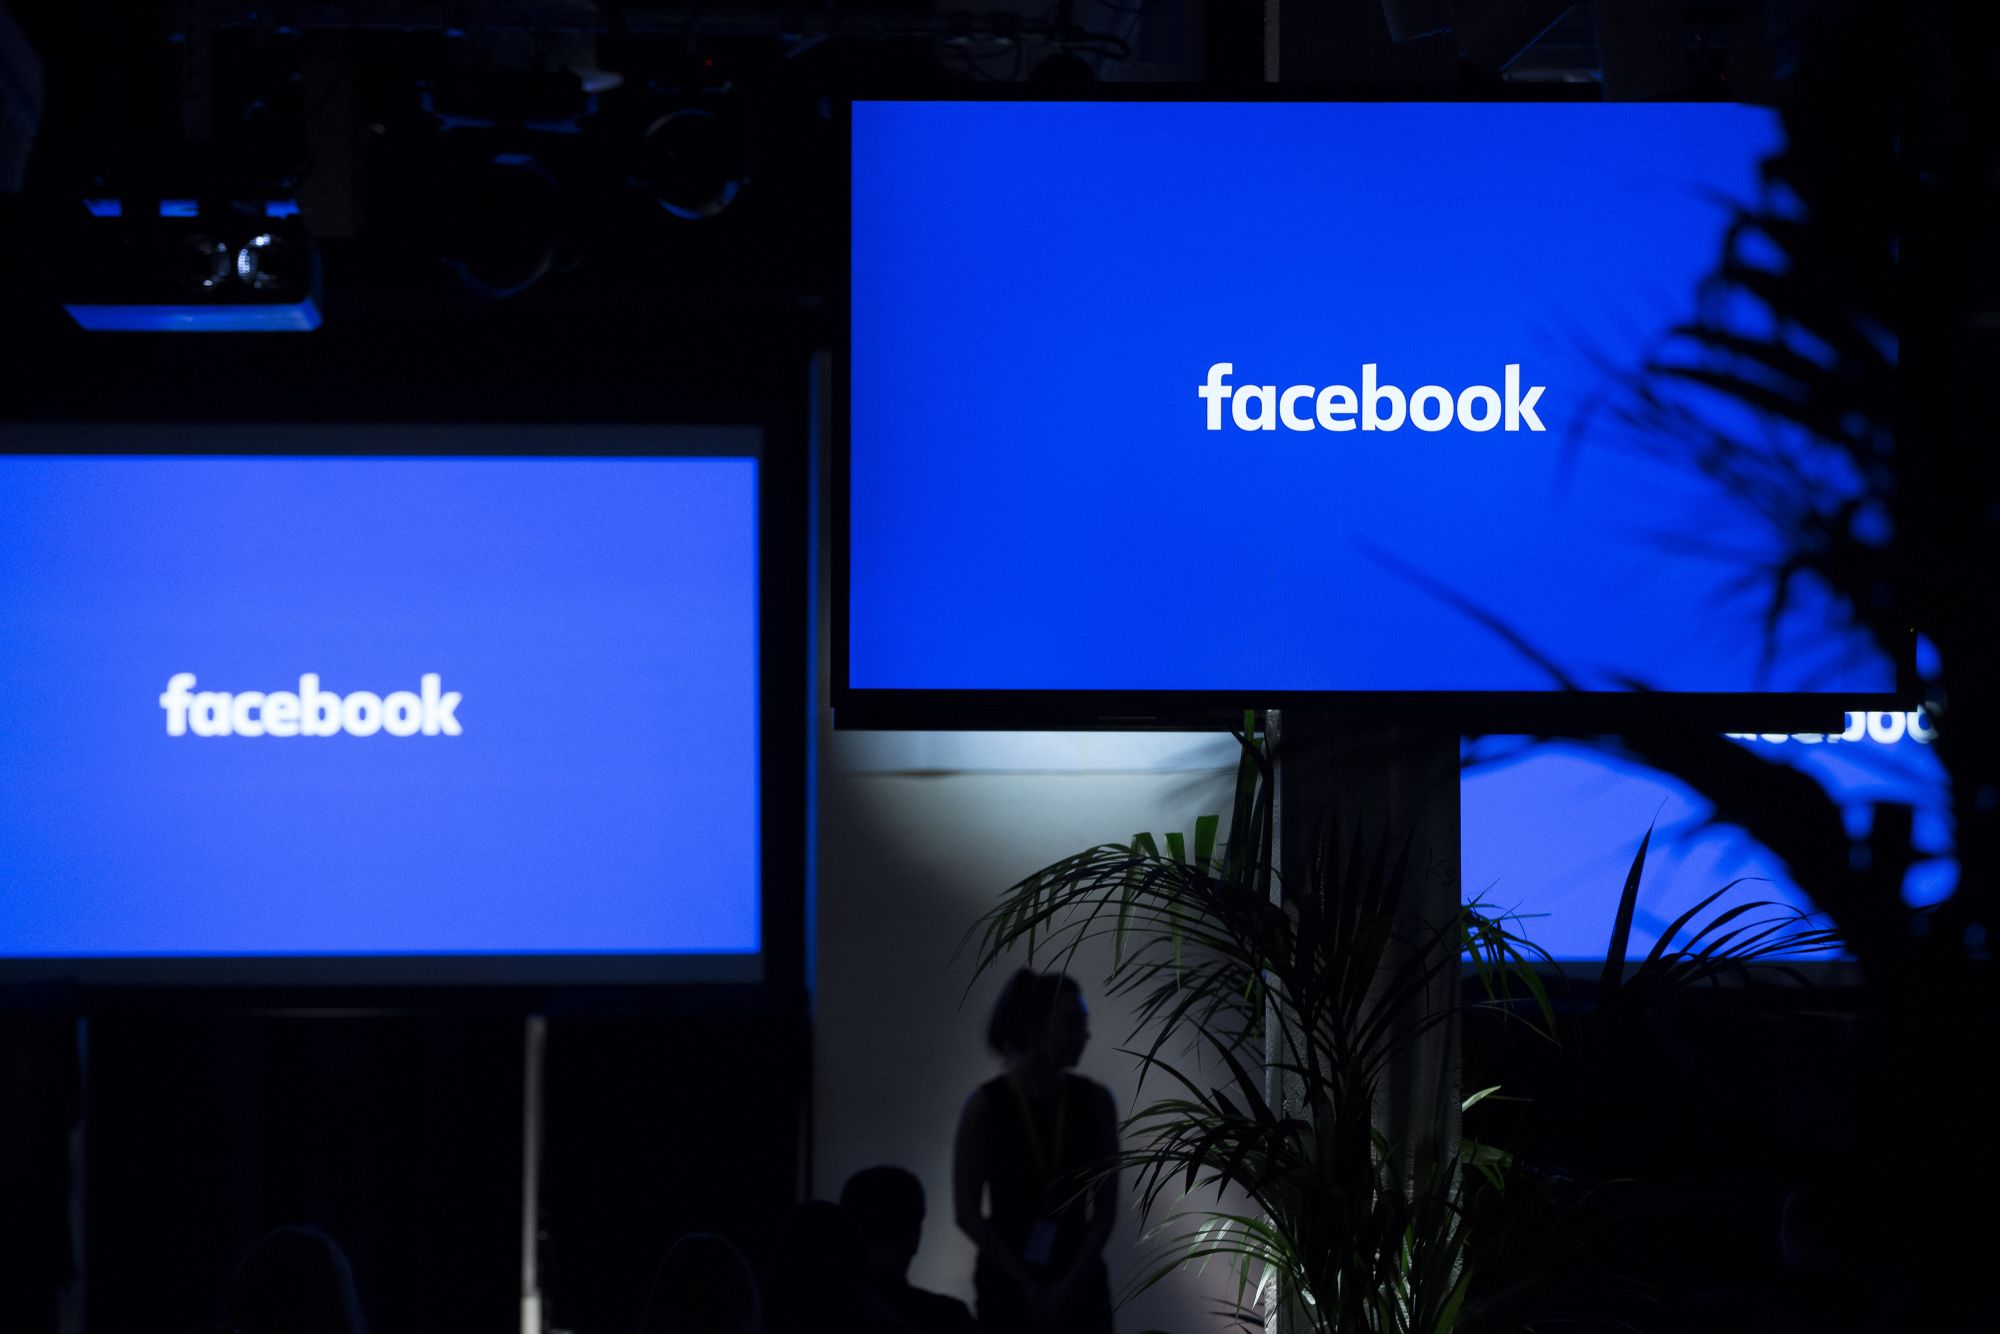 Such tech giants as Facebook no longer dominate hiring.